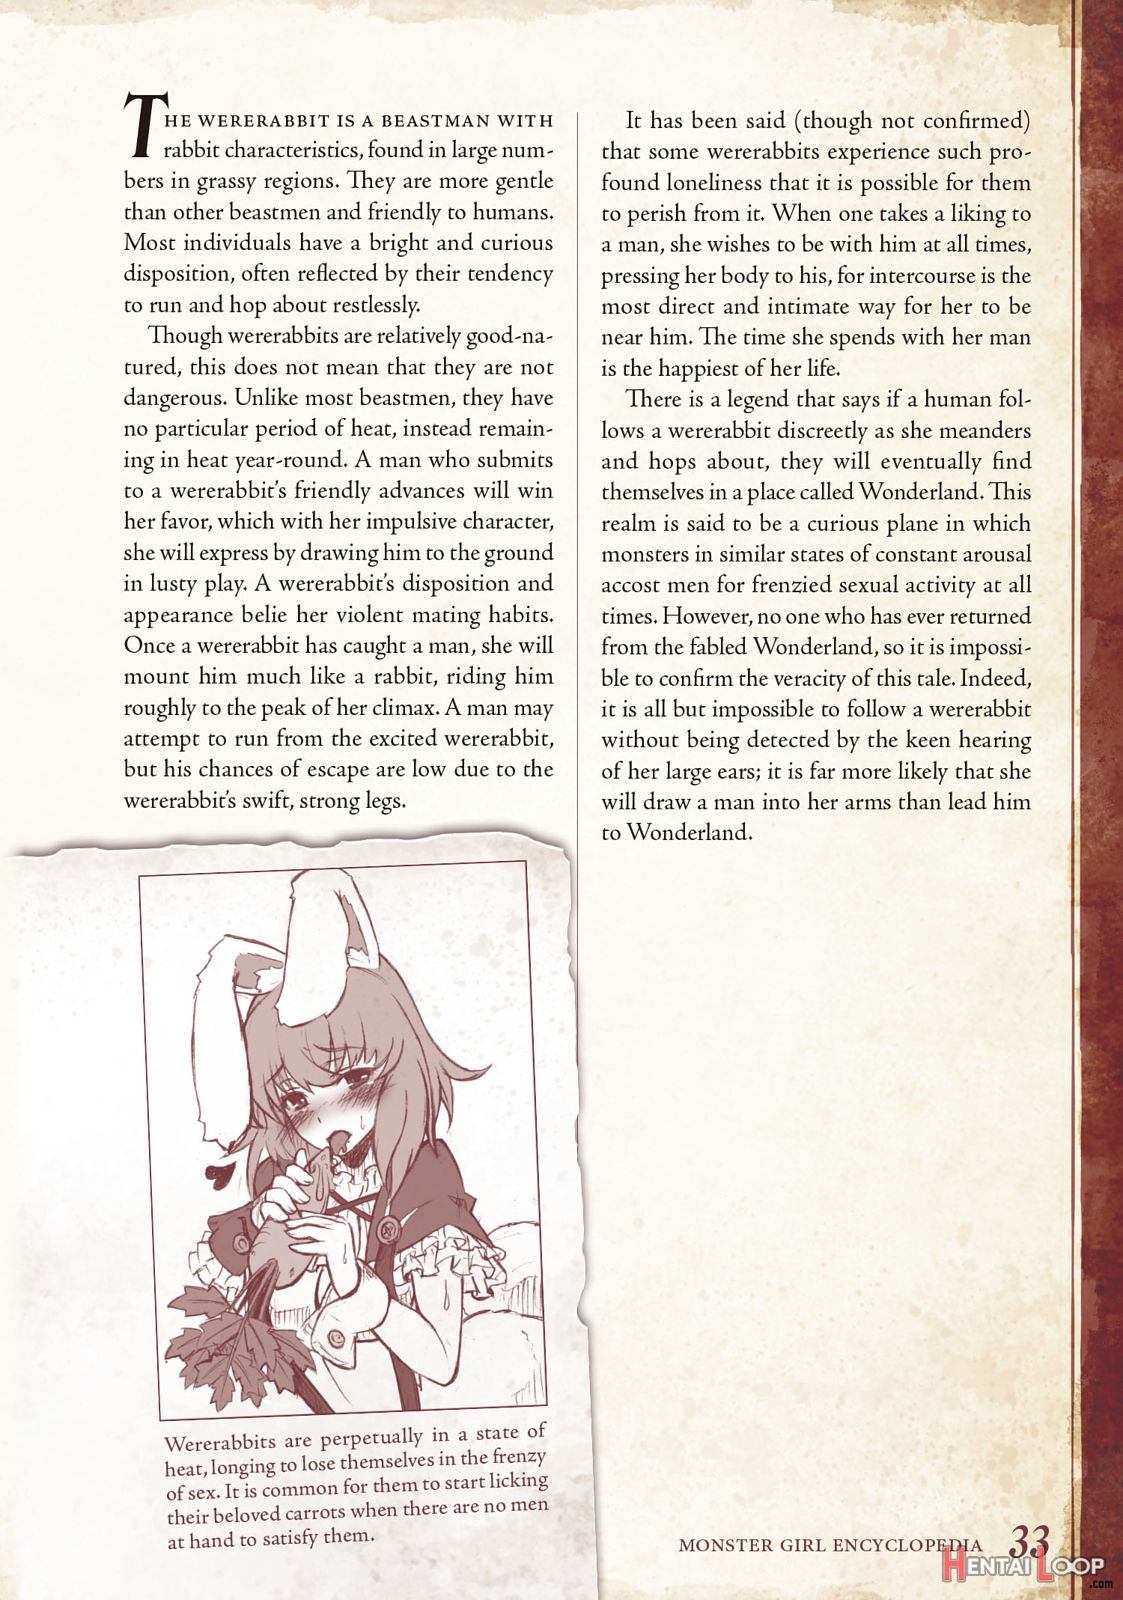 Monster Girl Encyclopedia Vol. 1 page 34